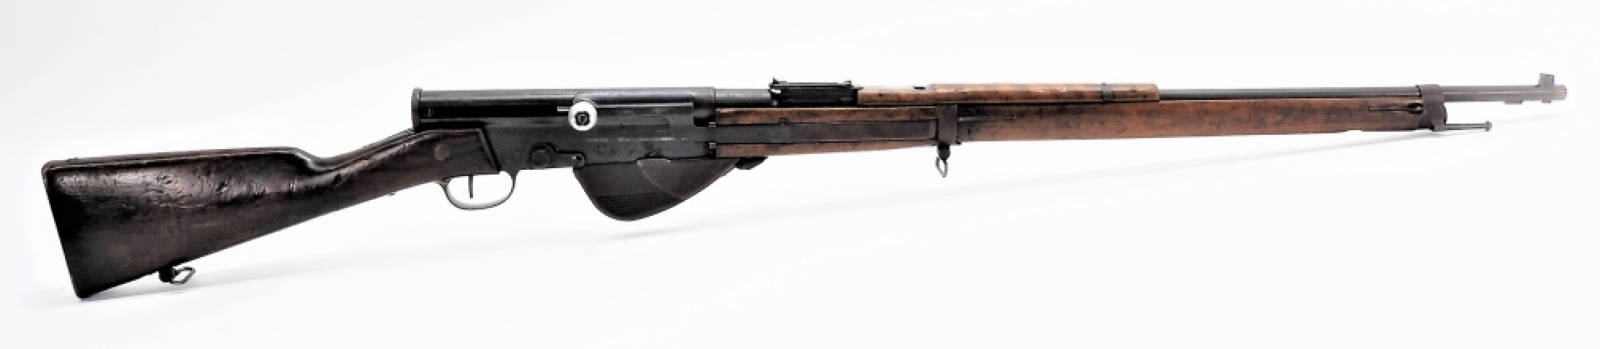 World War I-era French MAT Model 1917 RSC rifle, estimated at $2,000-$3,000 